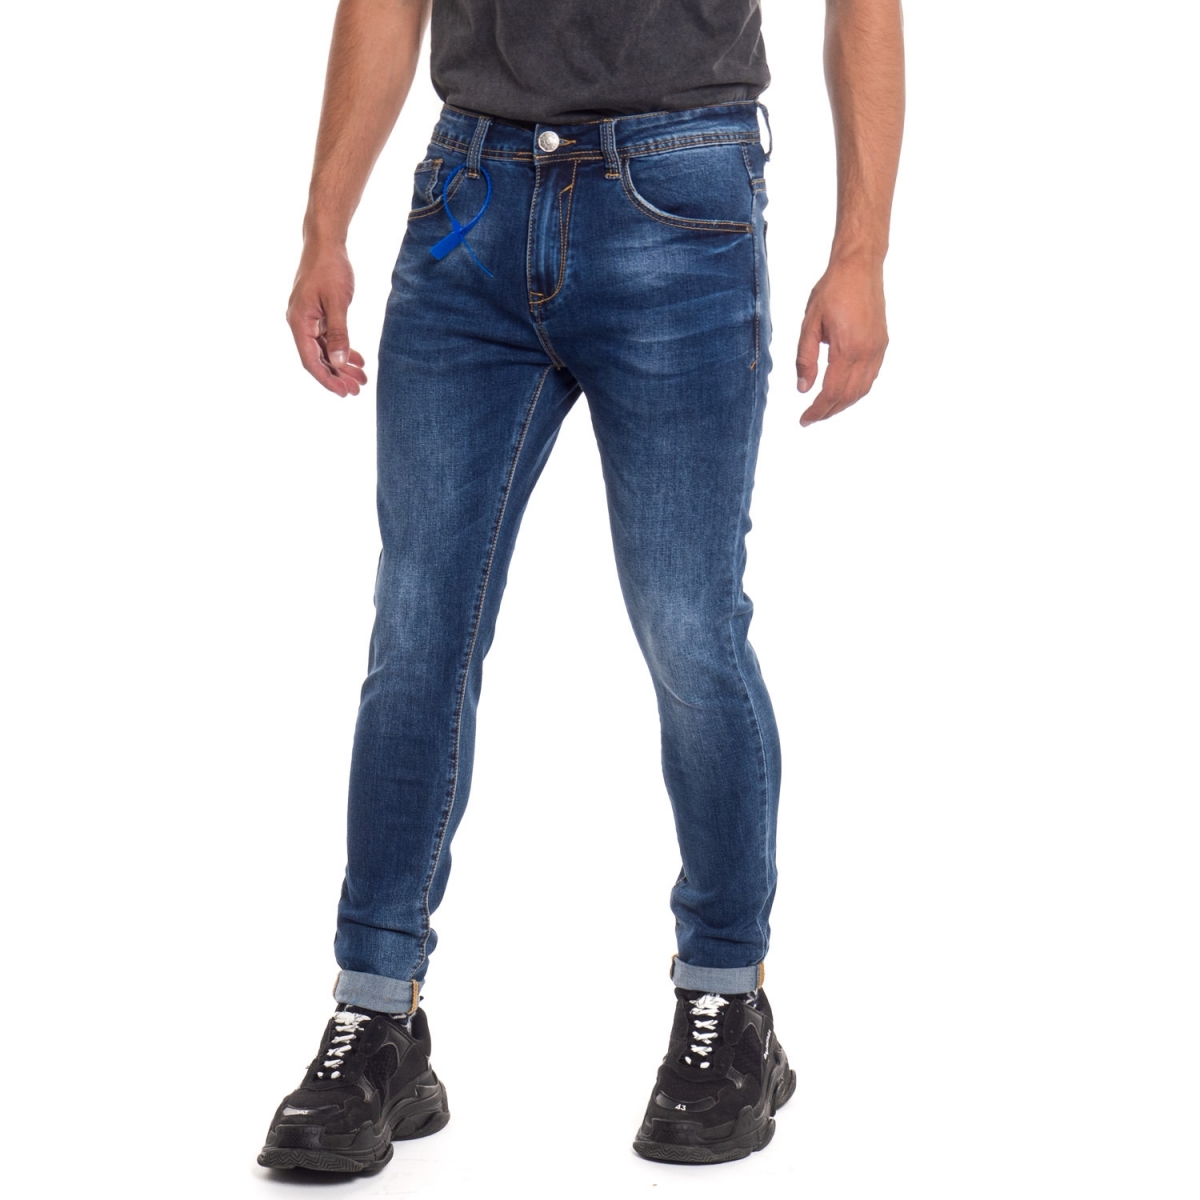 Kleidung Jeans mann Jeans LPM2214 LANDEK PARK Cafedelmar Shop